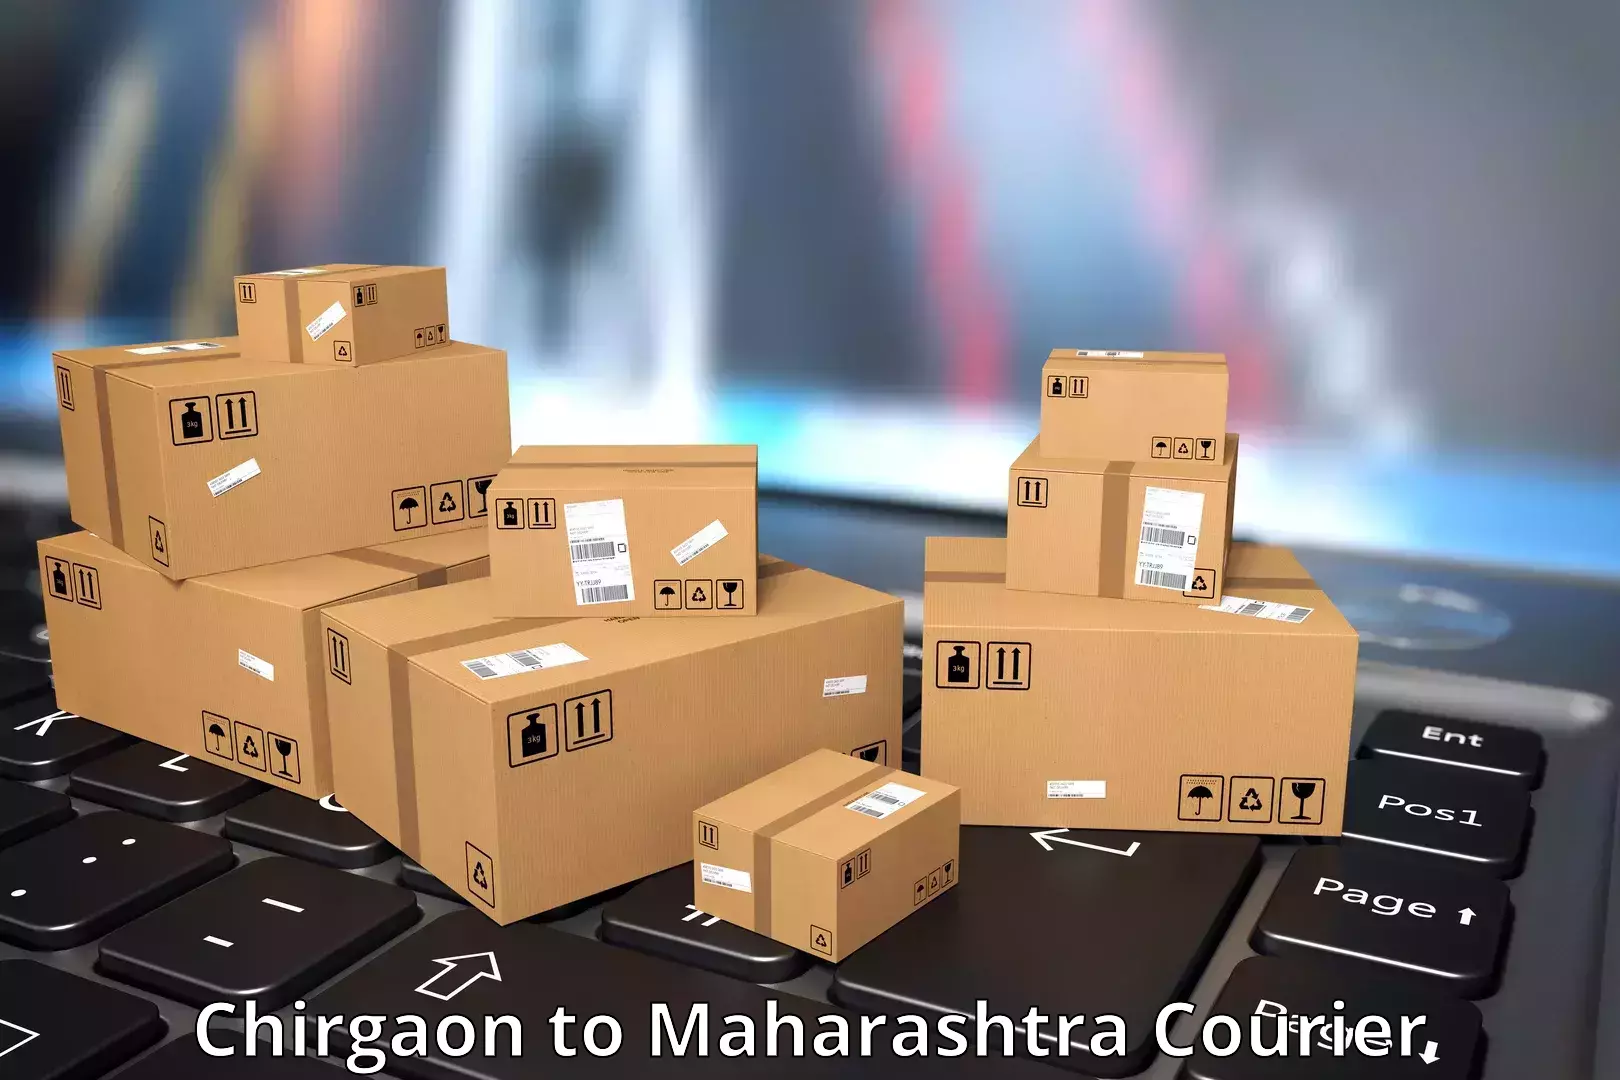 Efficient order fulfillment Chirgaon to DY Patil Vidyapeeth Mumbai